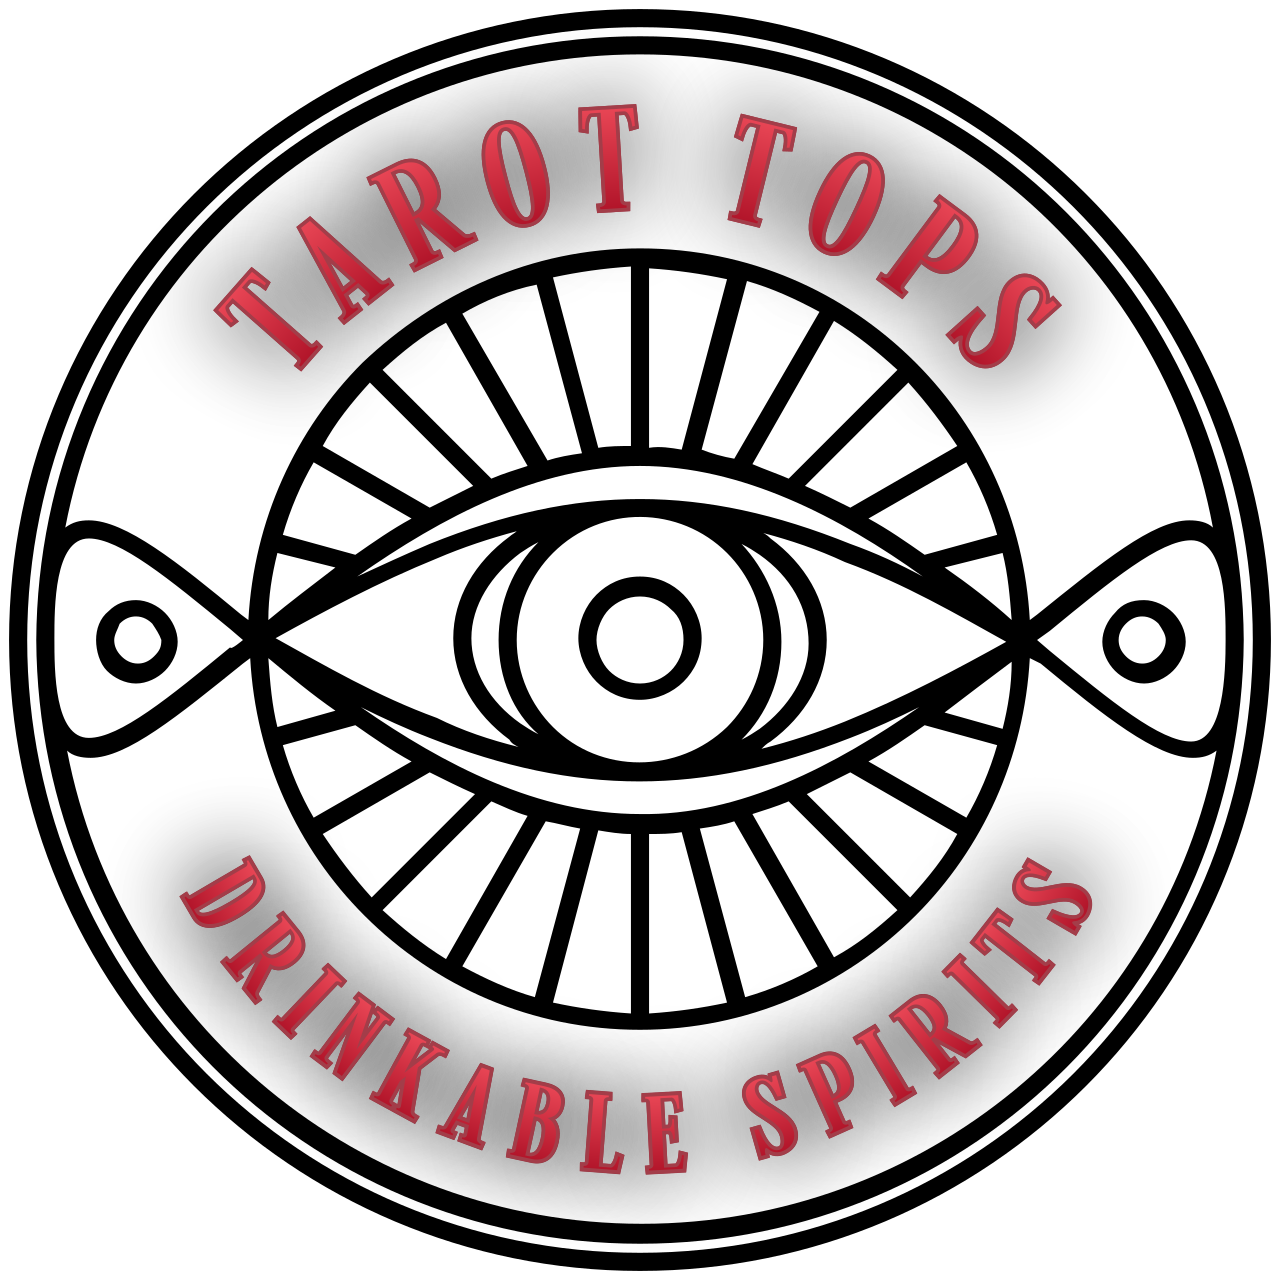 TAROT TOPS's logo